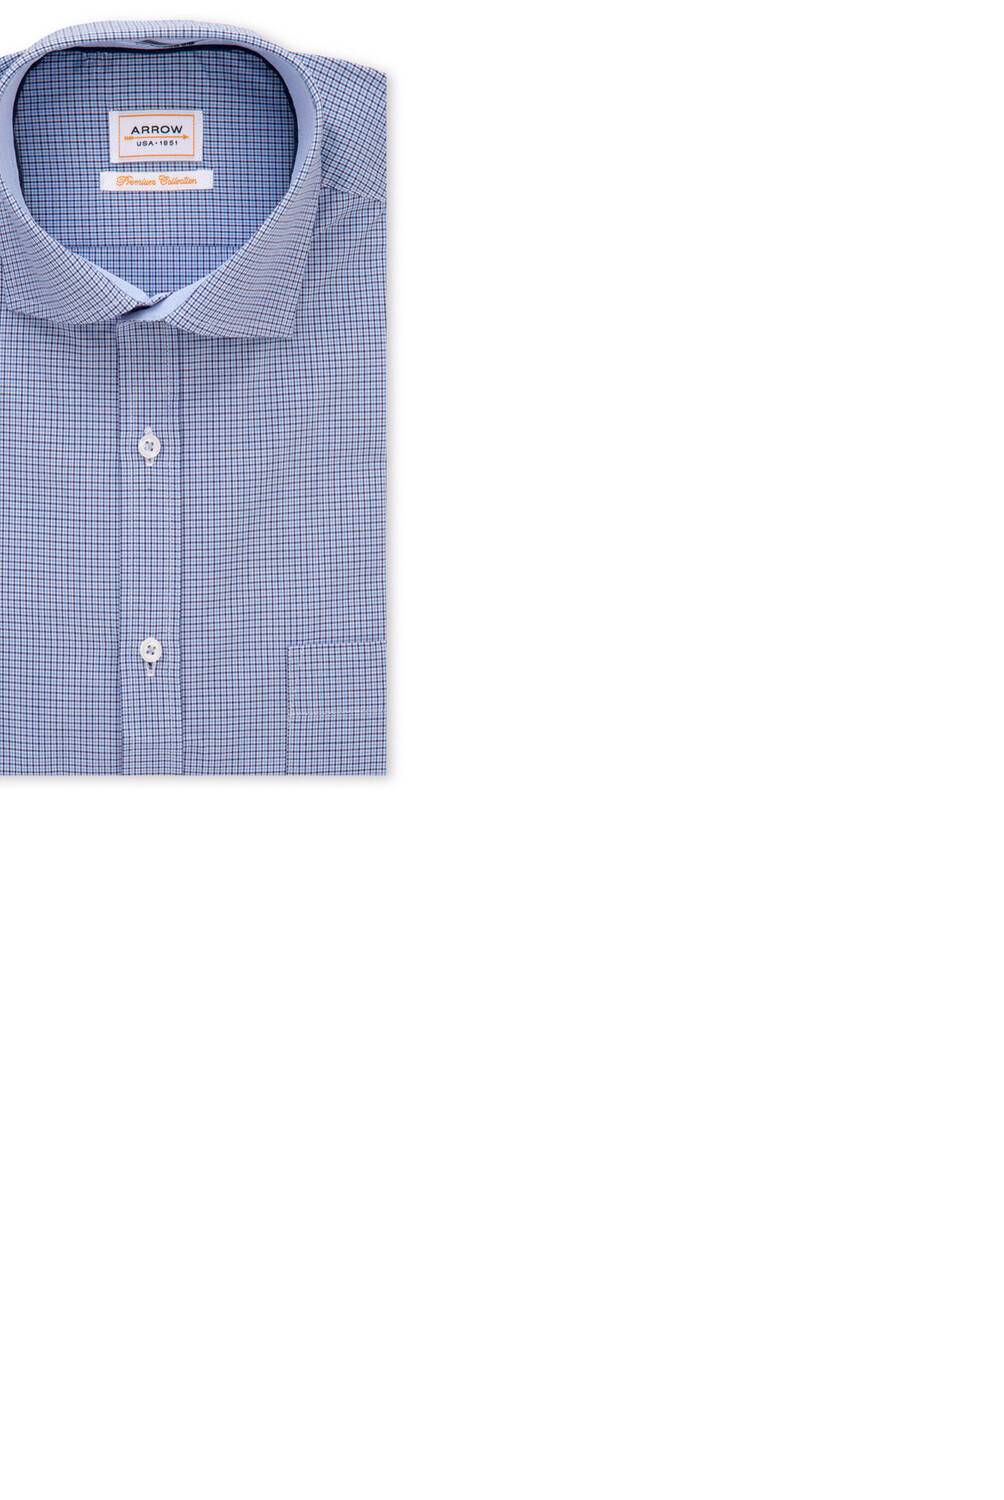 ARROW - Pack Camisa -Corbata Formal